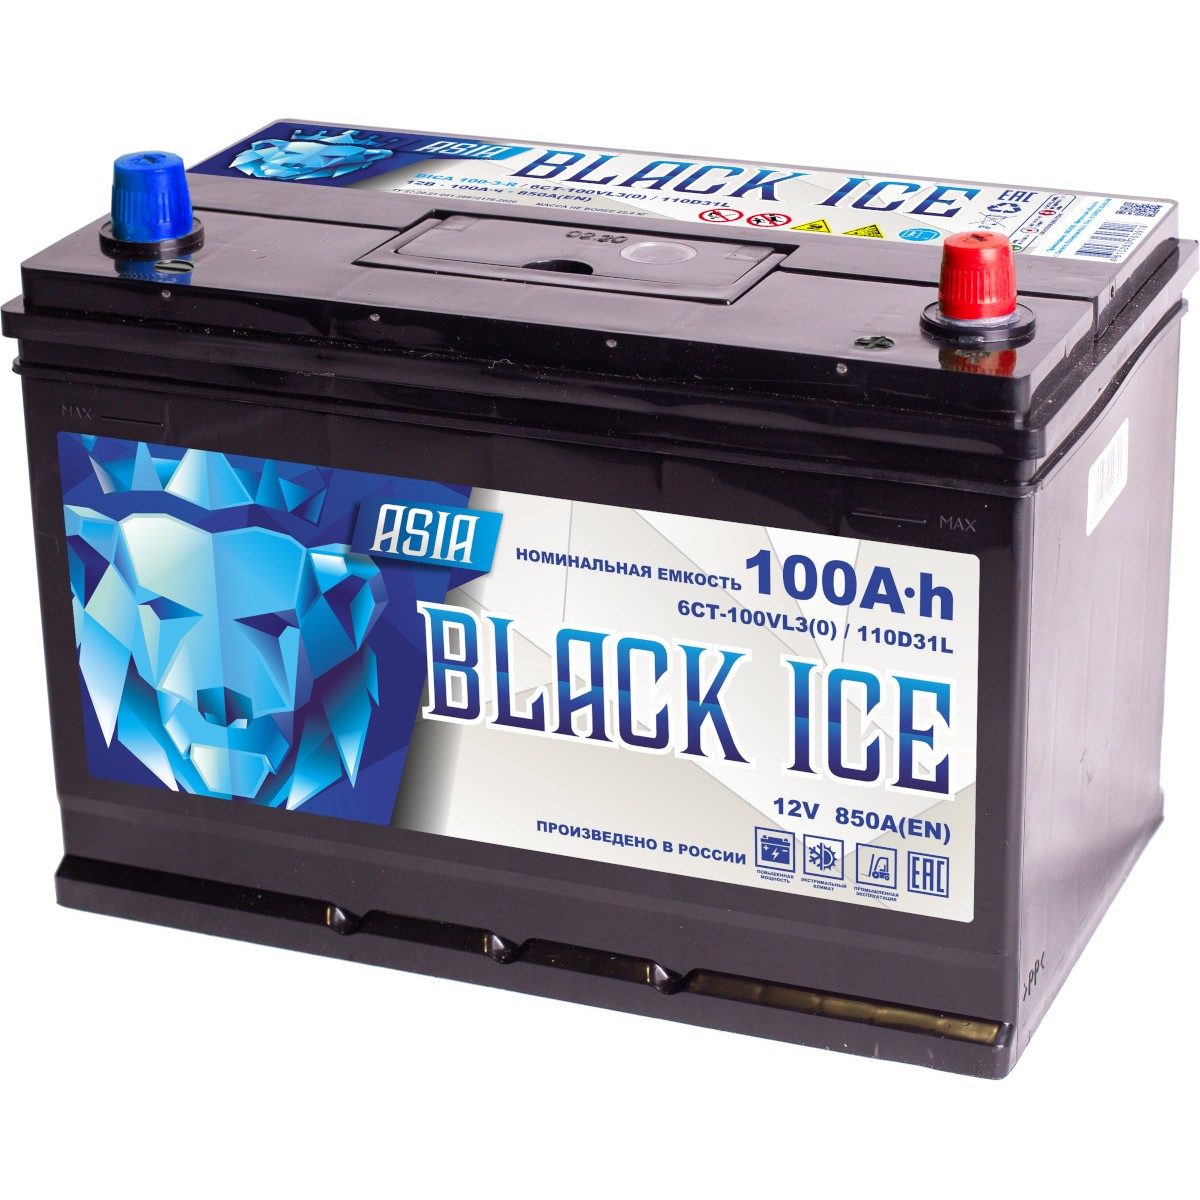 Battery black. Аккумулятор Black Ice 6ст. Black Ice Pro 75d26r. Black Ice 75 аккумулятор. Аккумулятор. Отзывы Black Ice 100 Ah.